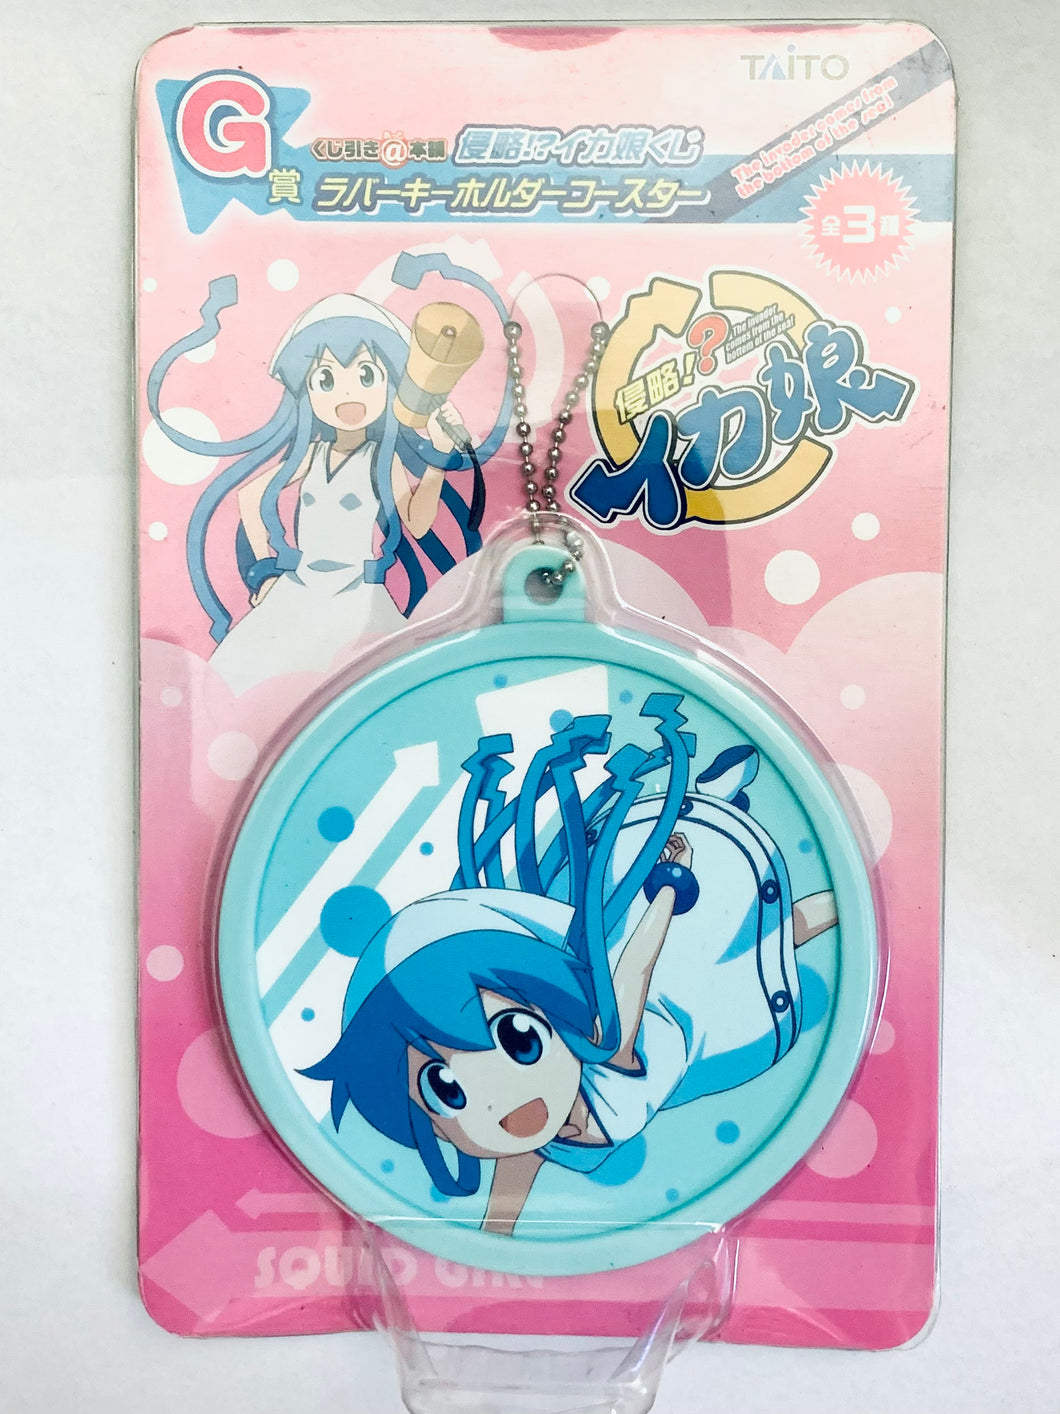 Squid Girl / Shinryaku!? Ika Musume - Ika Musume - Rubber Coaster - Keychain (Prize G)